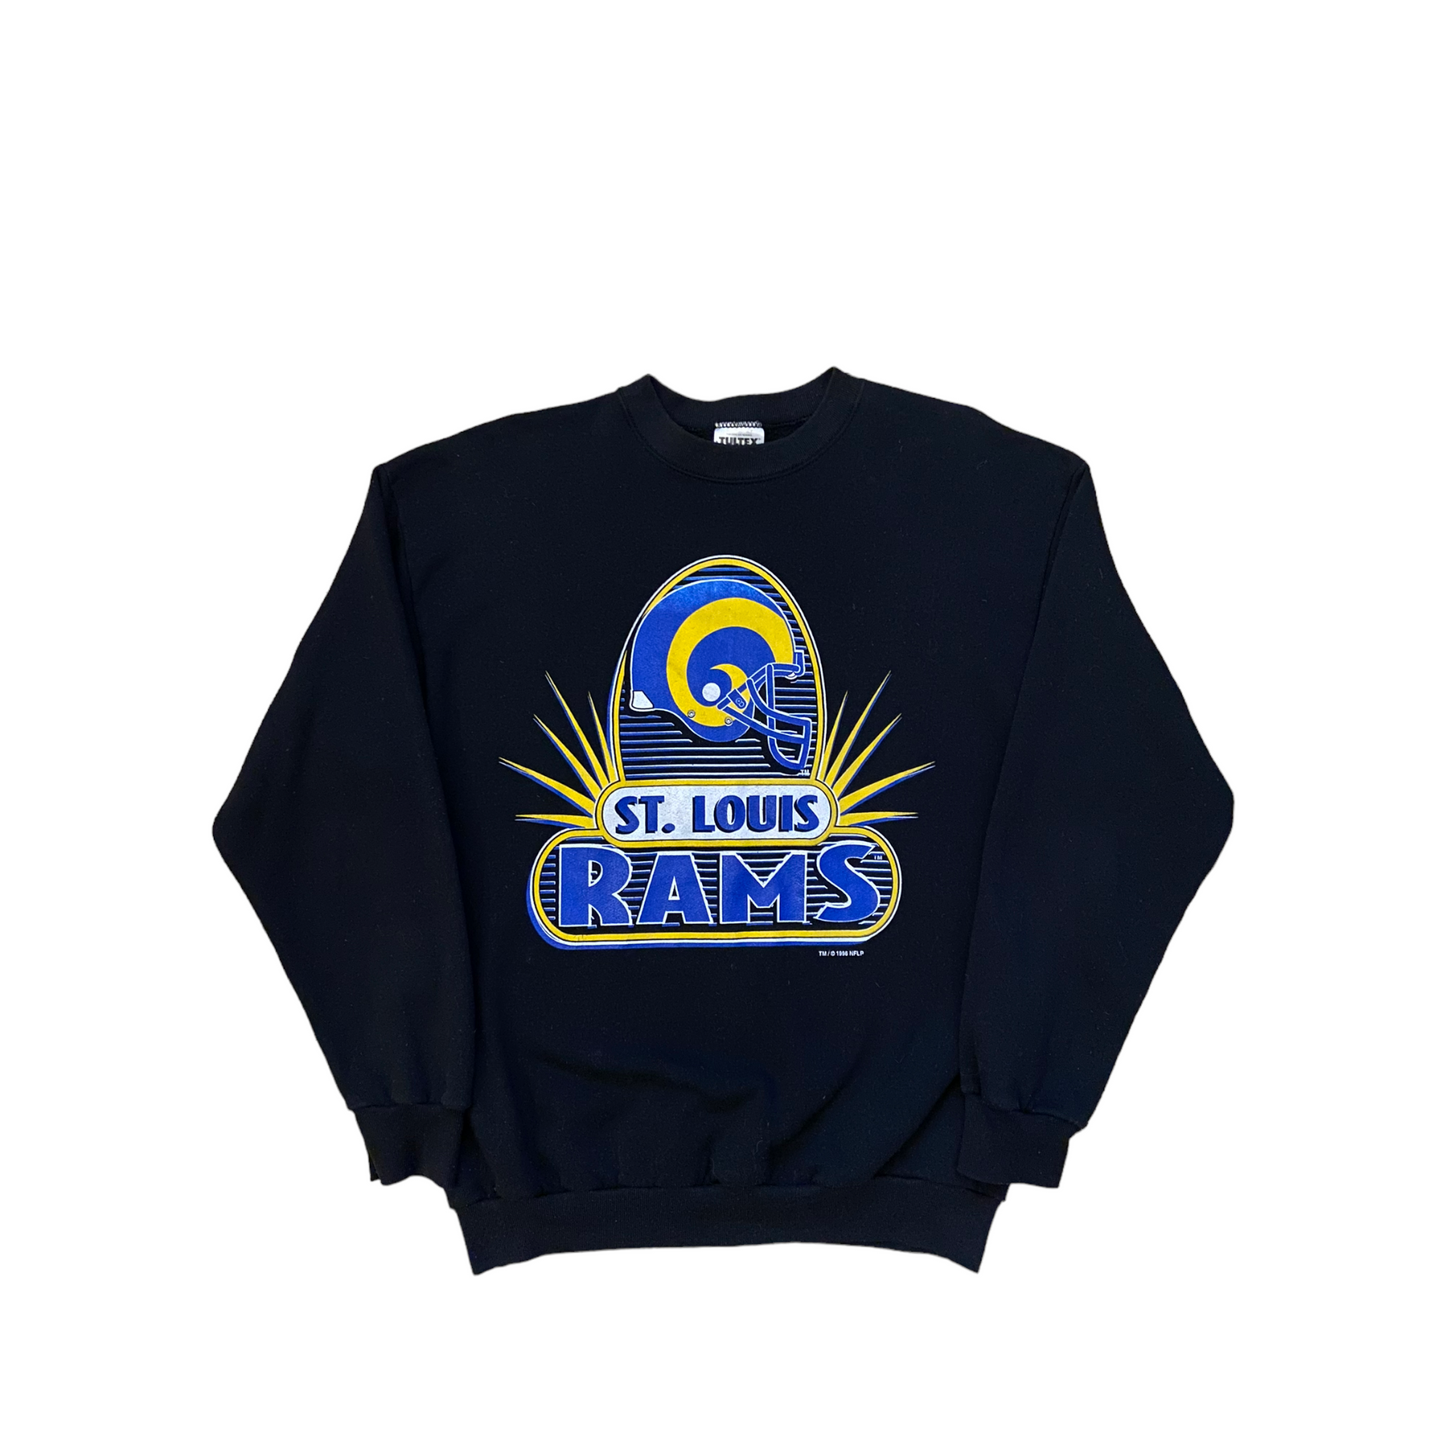 Rams sweatshirt 1996 L